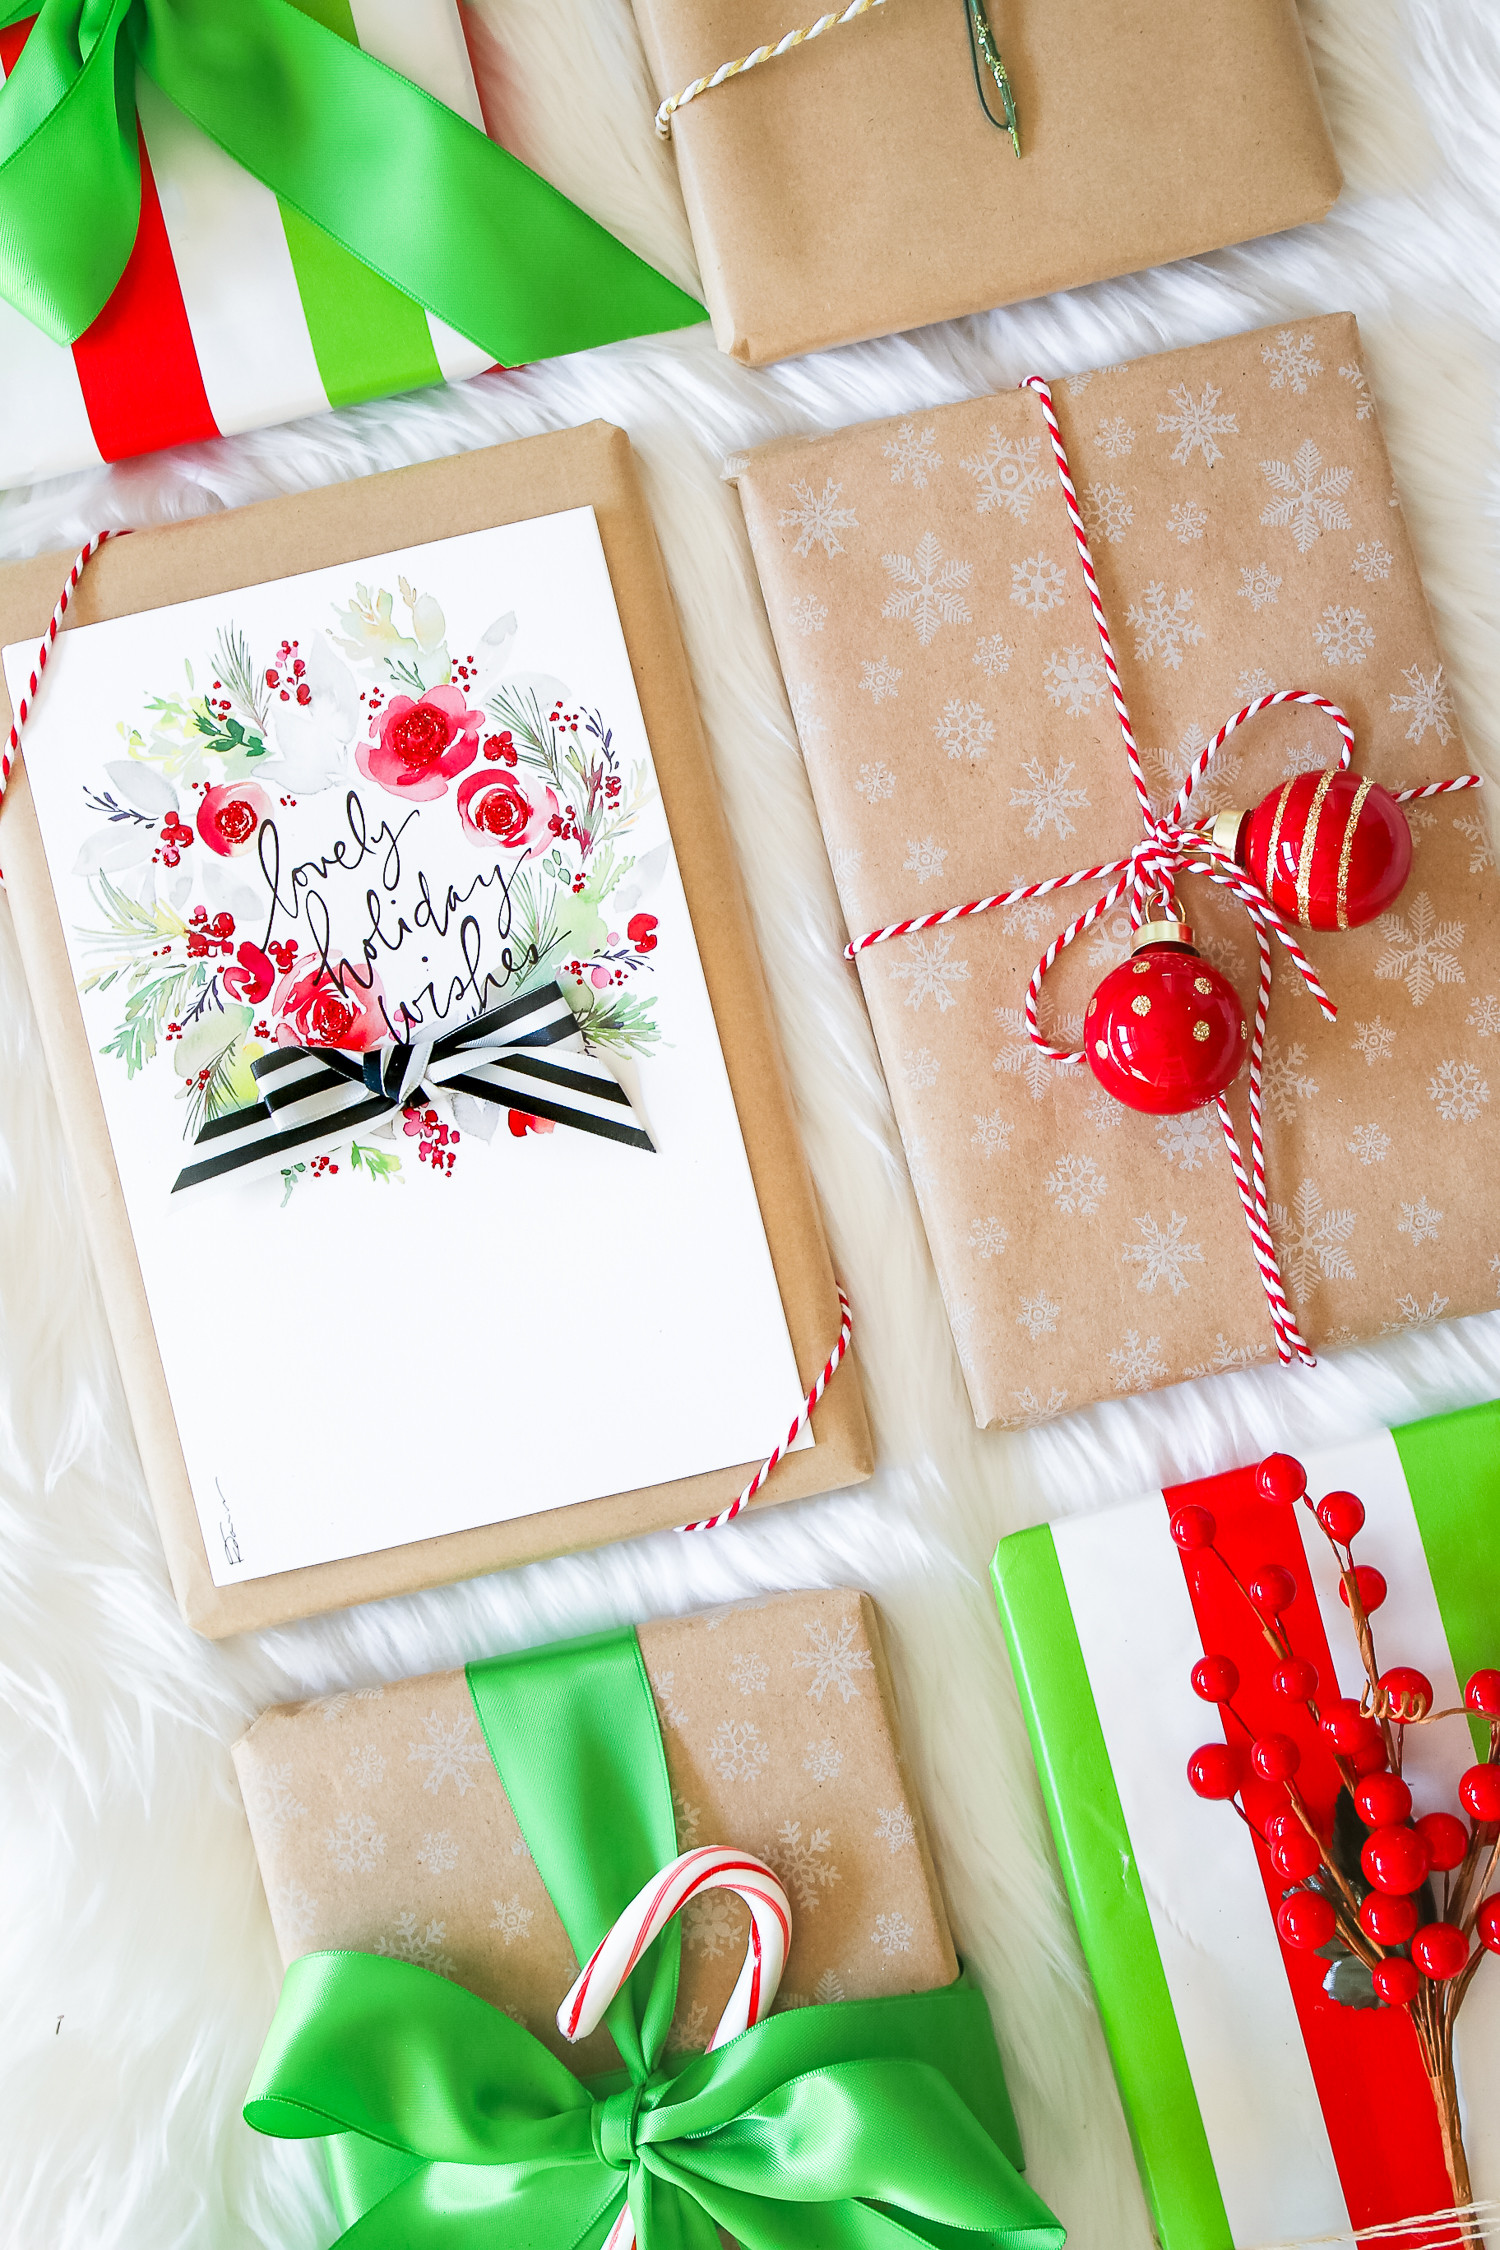 Christmas Gift Wrapping Ideas Elegant
 Elegant Holiday Gift Wrap Ideas